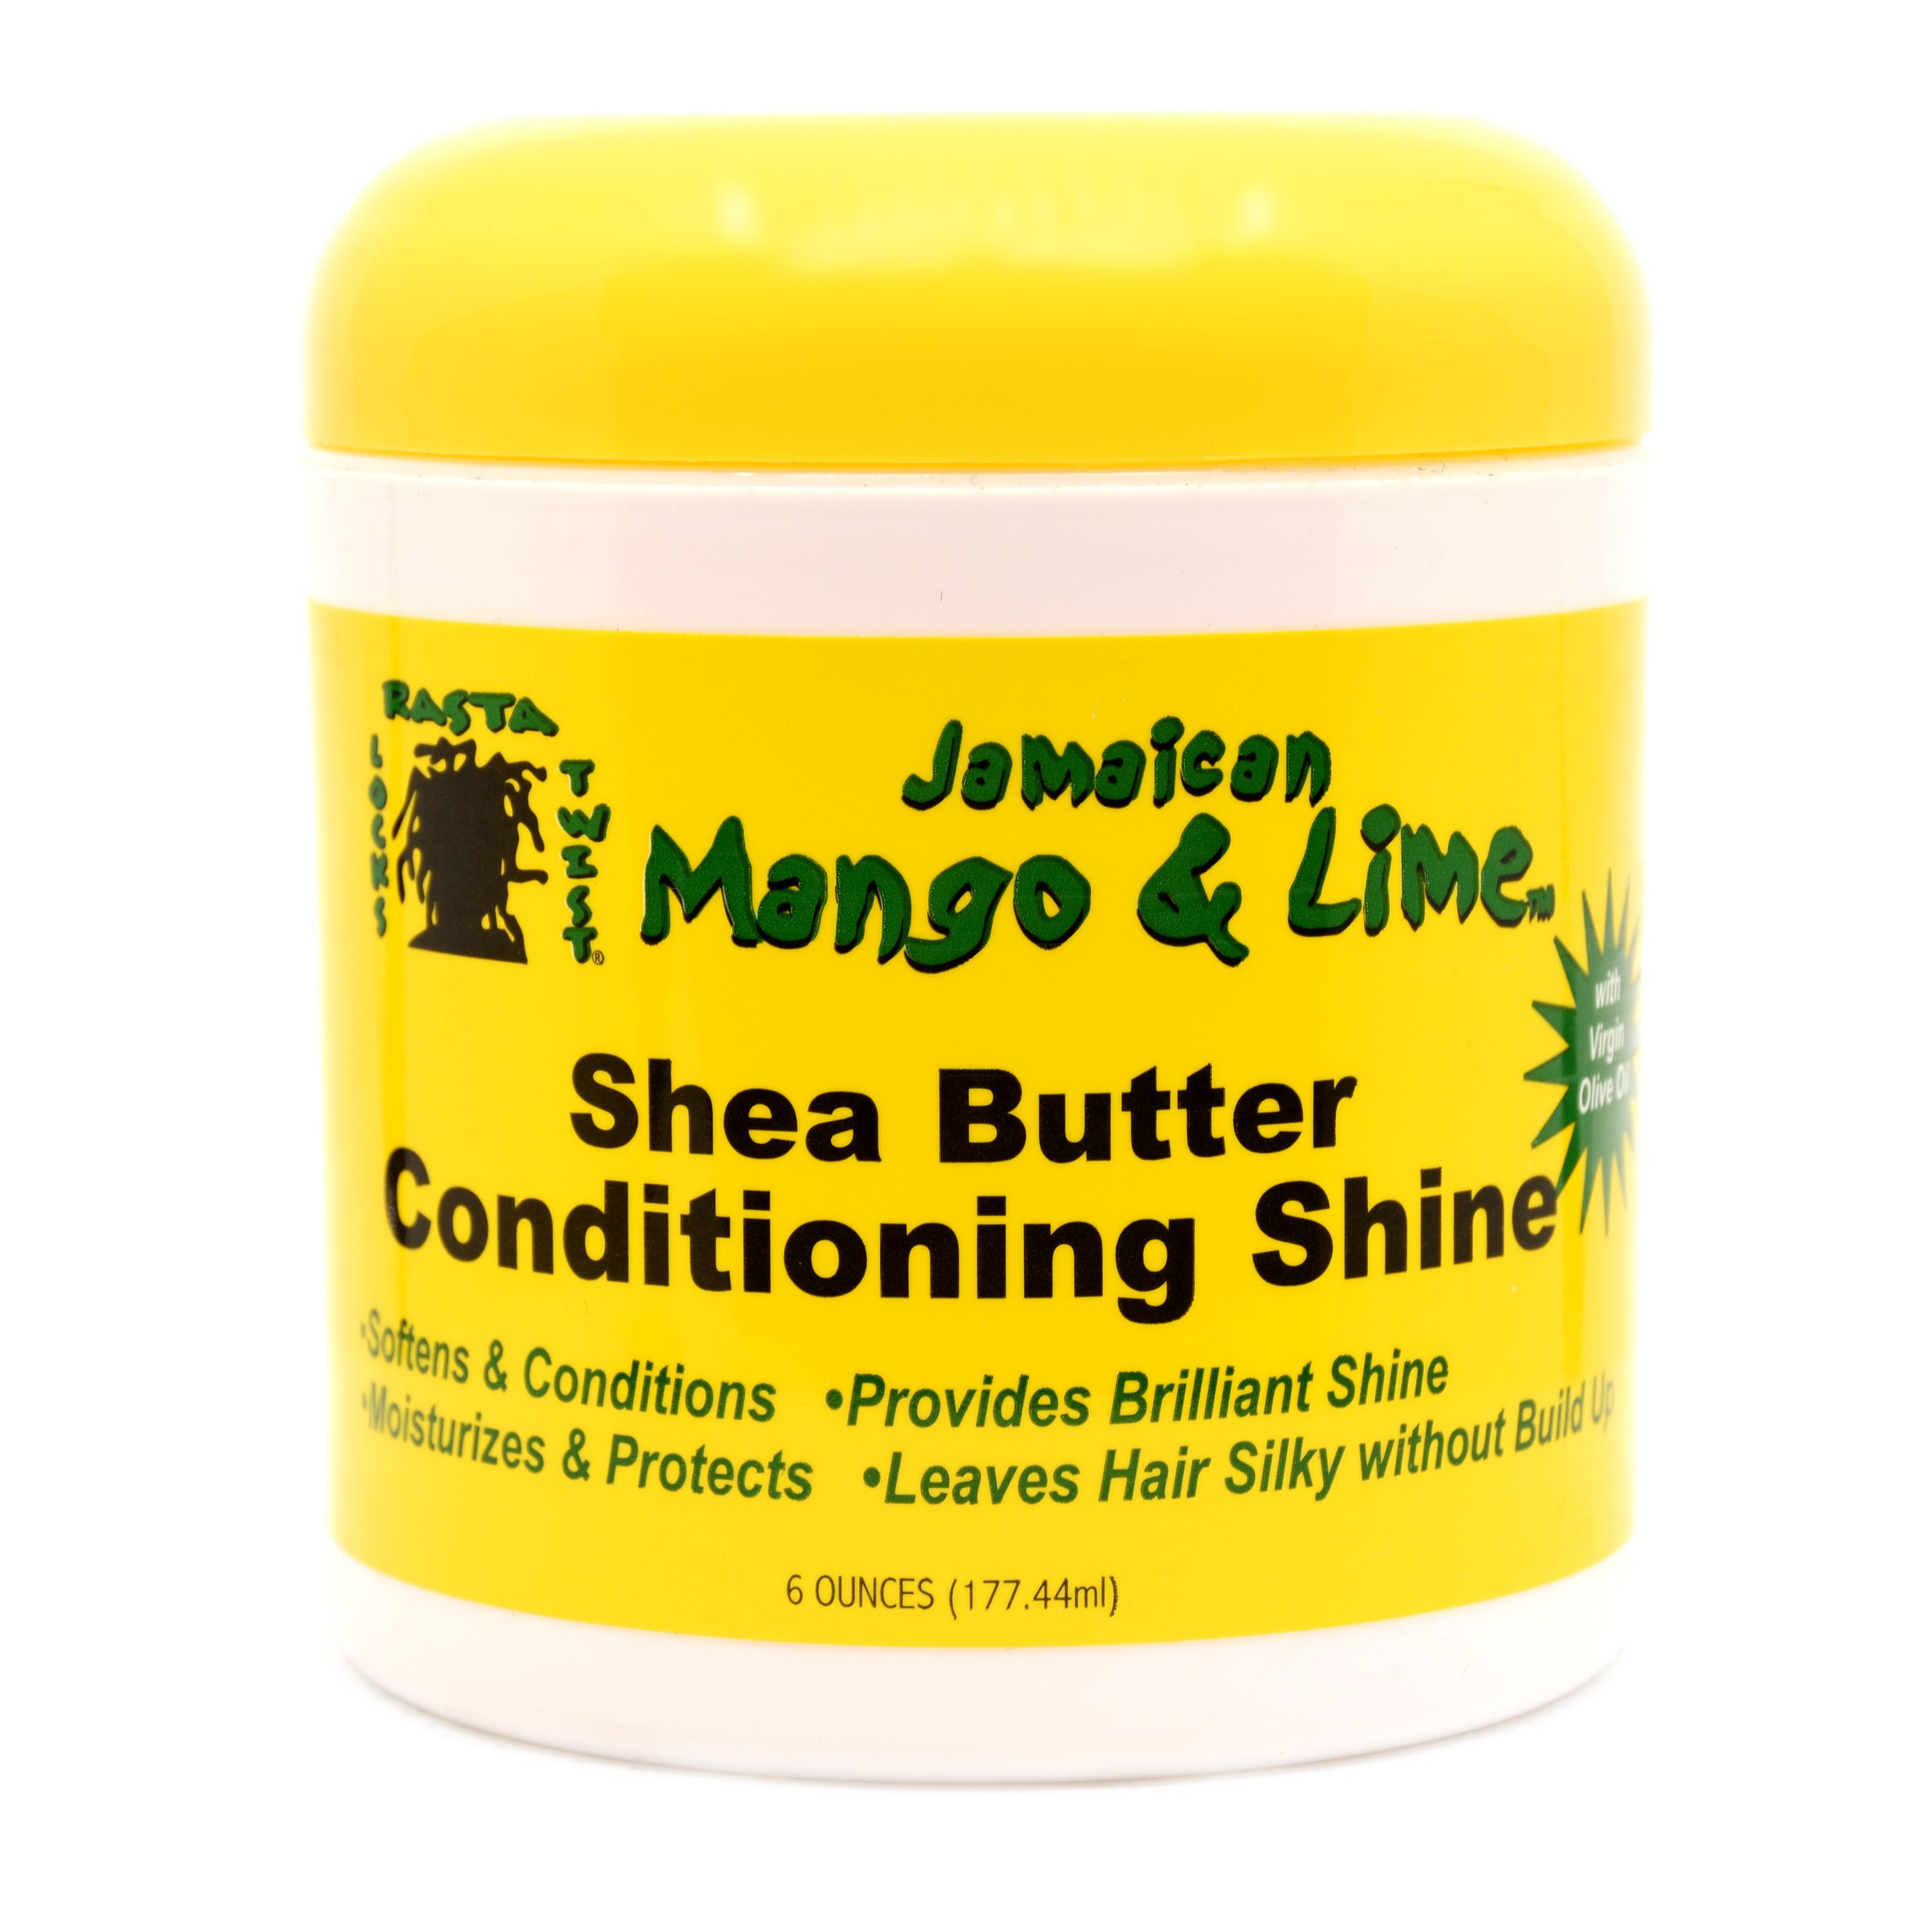 Jamaican Mango & Lime Shea Butter Conditioning Shine - 6oz